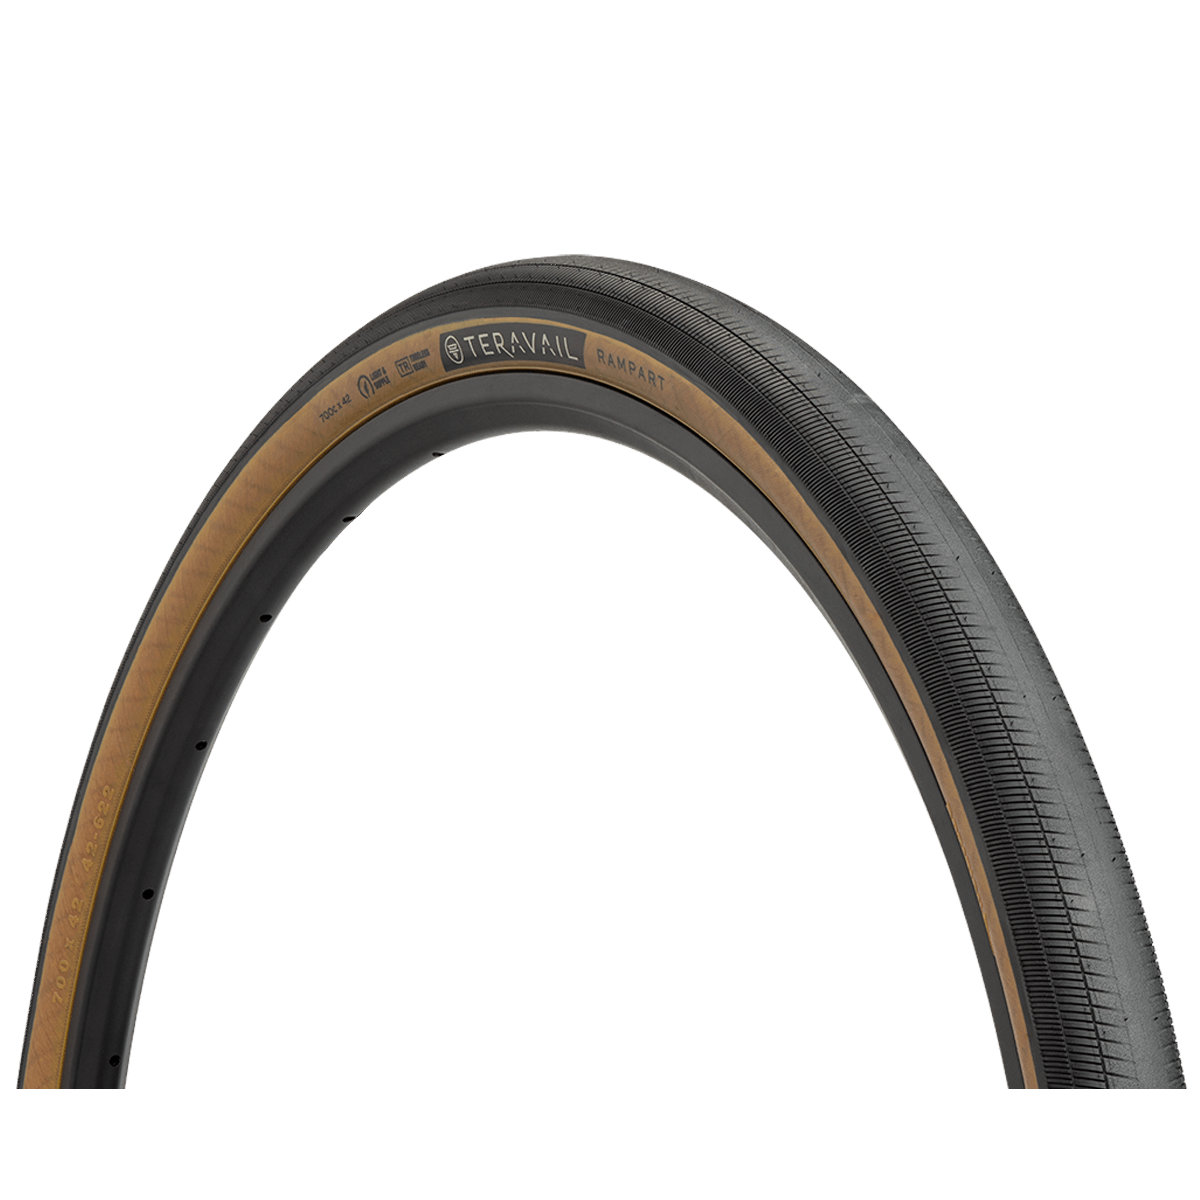 Productfoto van Teravail Rampart Folding Tire - Light and Supple - 42-622 - black / tanwall